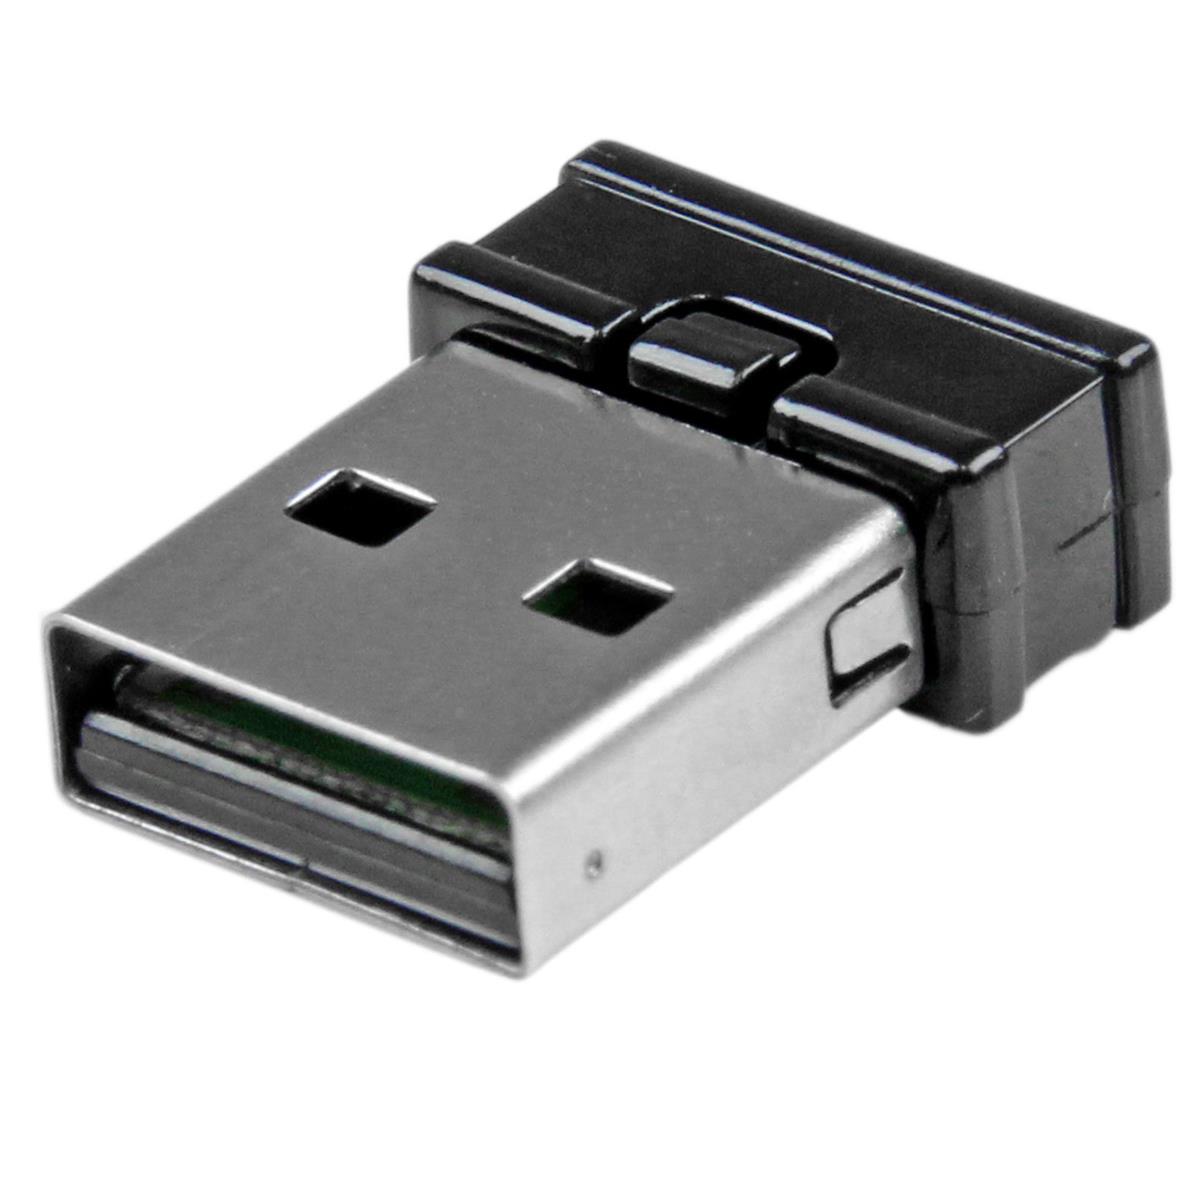 Image of StarTech 10m / 32.81' Class 2 EDR Wireless Dongle Mini USB Bluetooth 4.0 Adapter